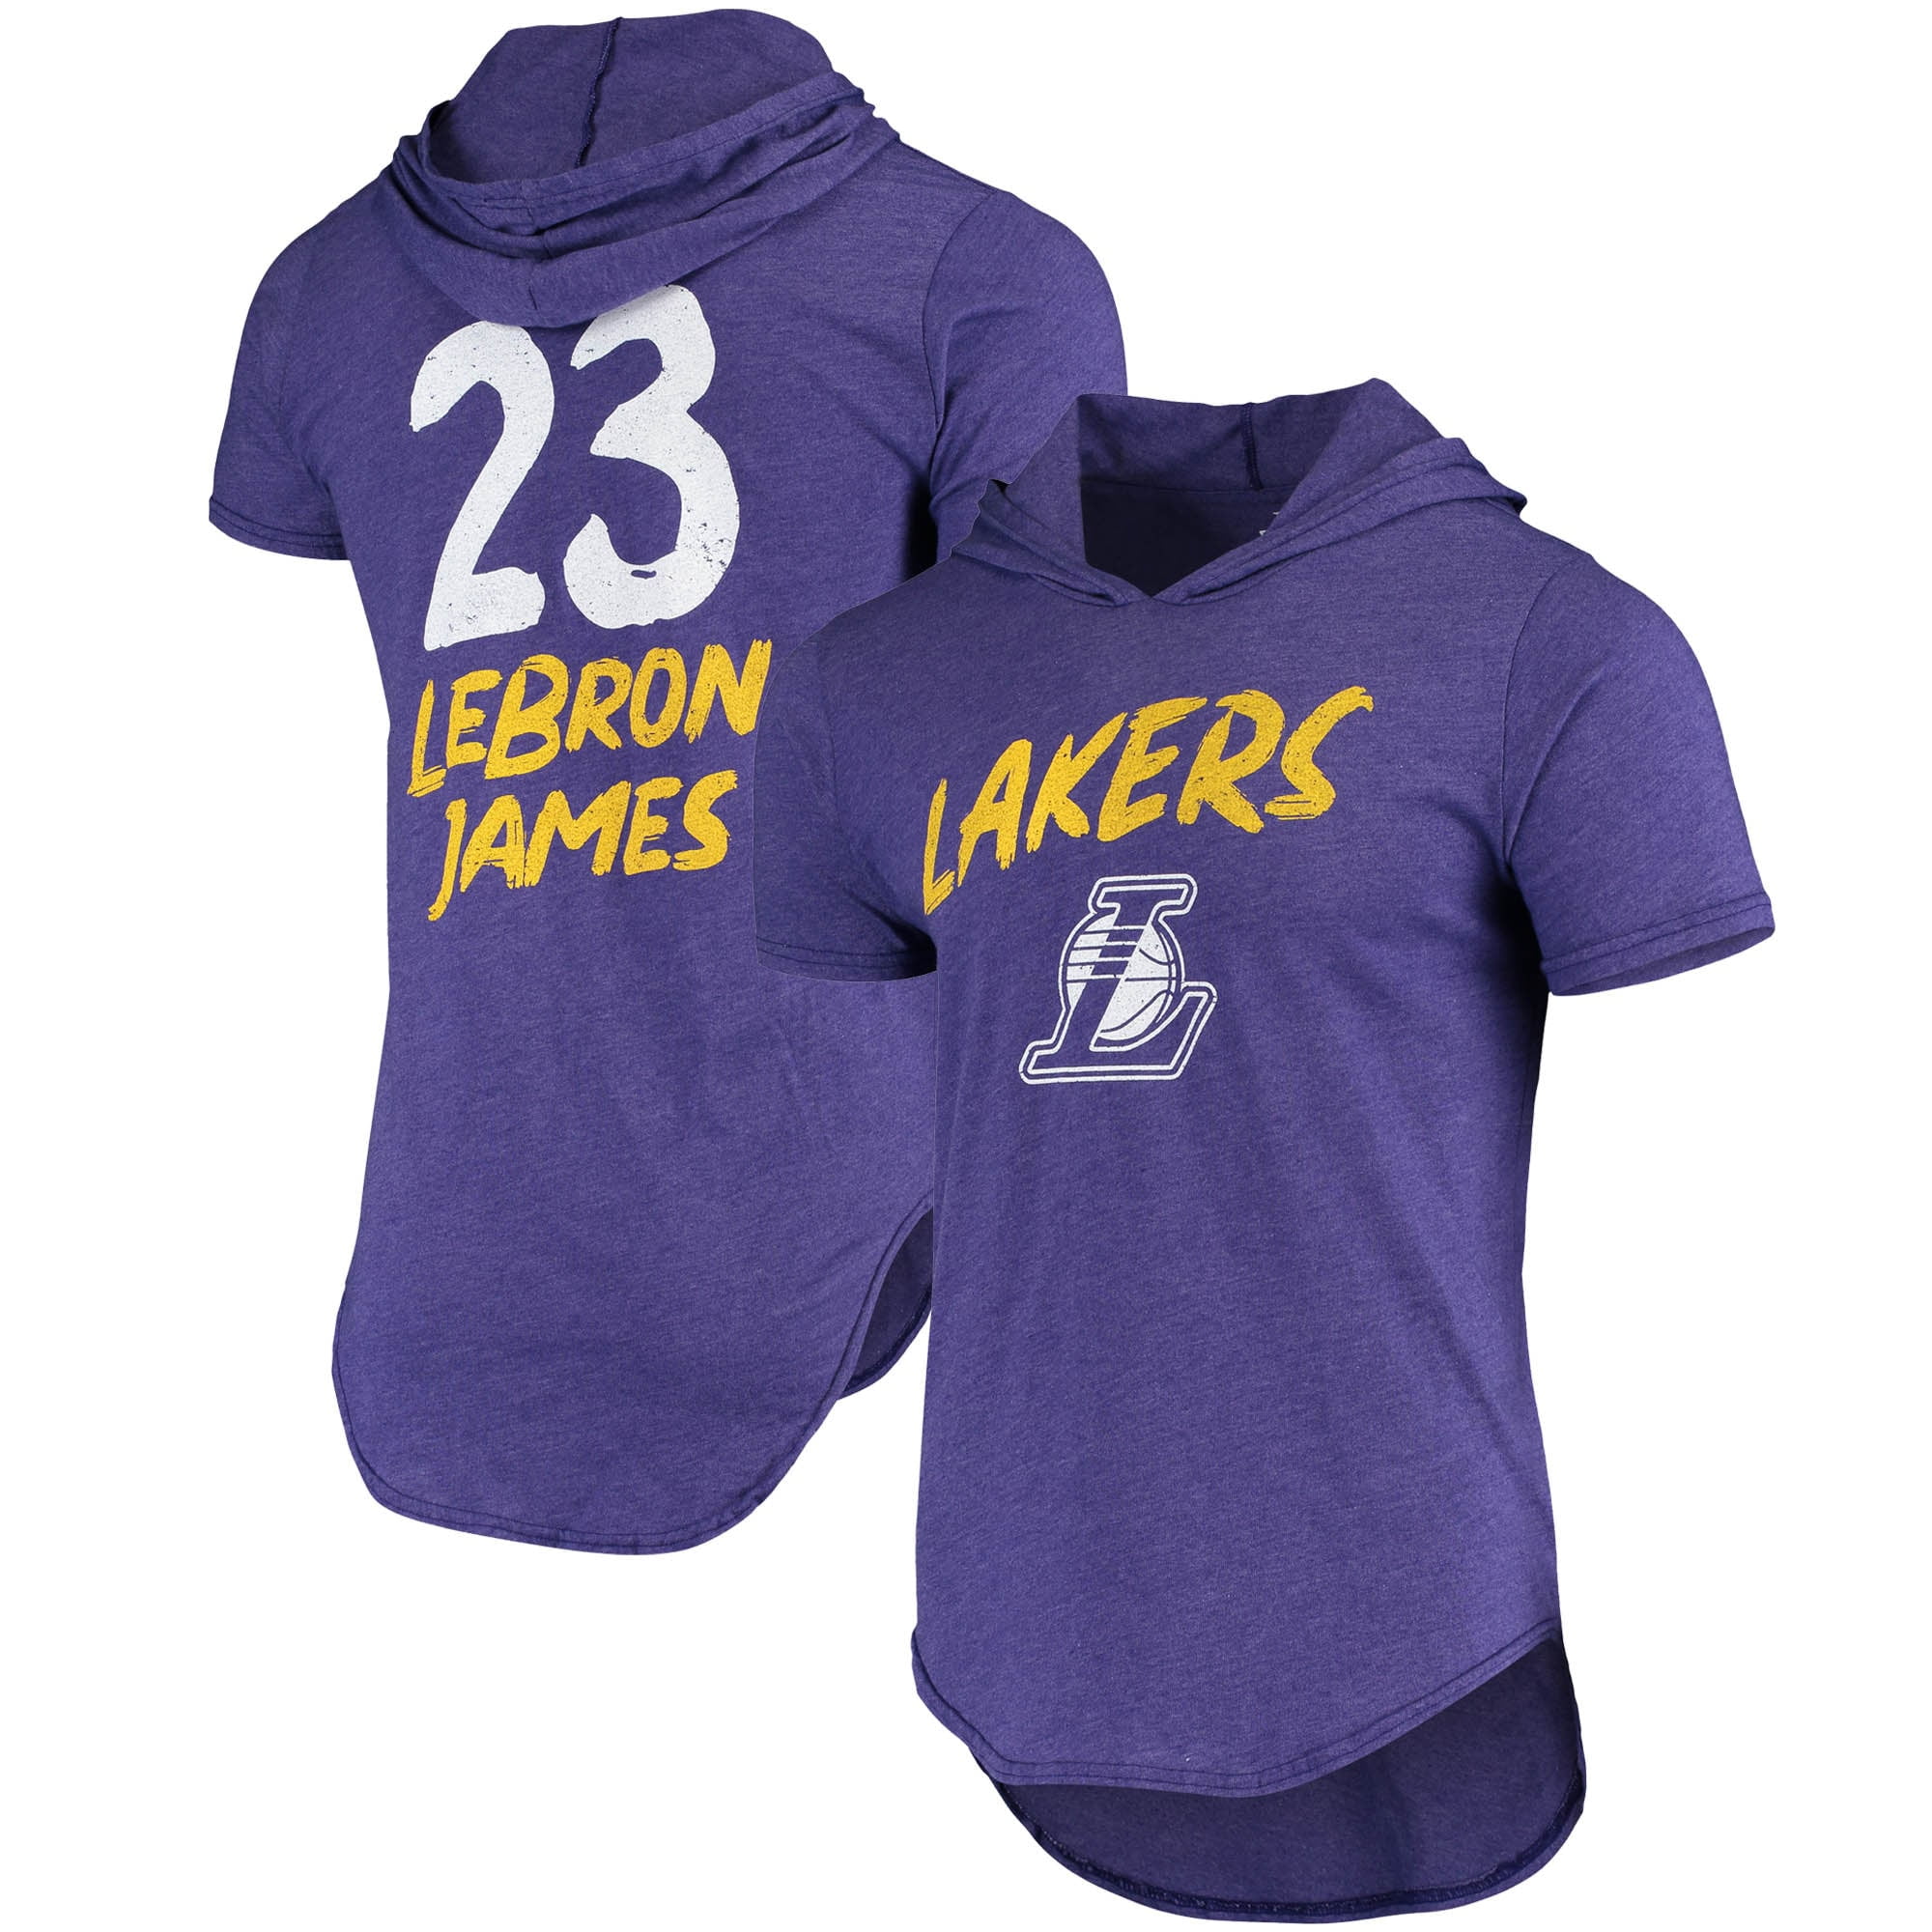 Fan Gift Unisex T-Shirt Sweatshirt Hoodie Basketball Shirt Vintage Los Angeles Lakers Lebron James Shirt Shirt For Man Woman